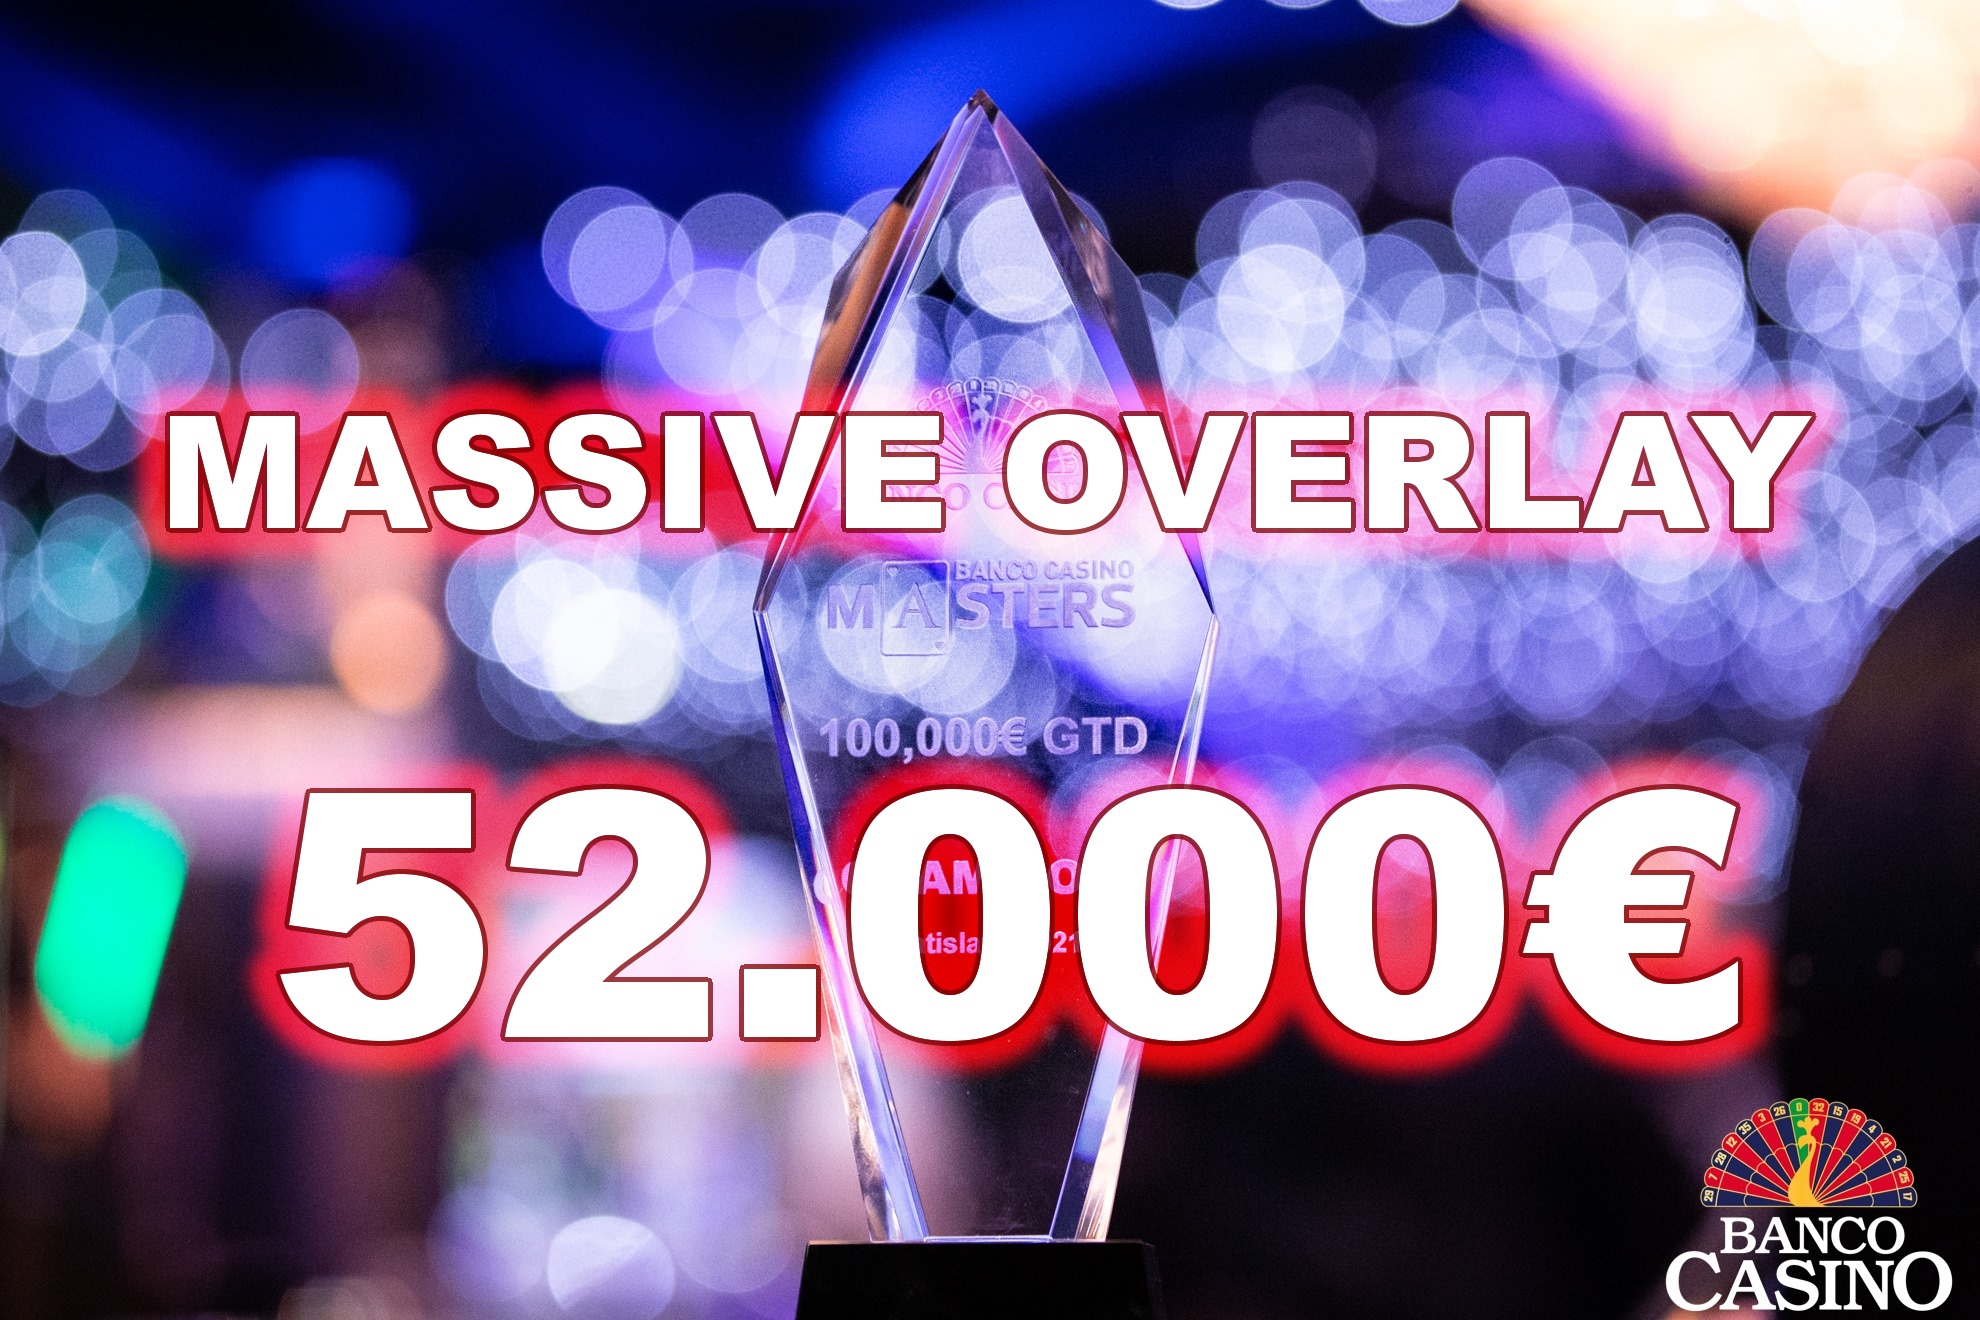 Banco Casino Masters 100.000€ GTD  – Masívny overlay 52.000€!?